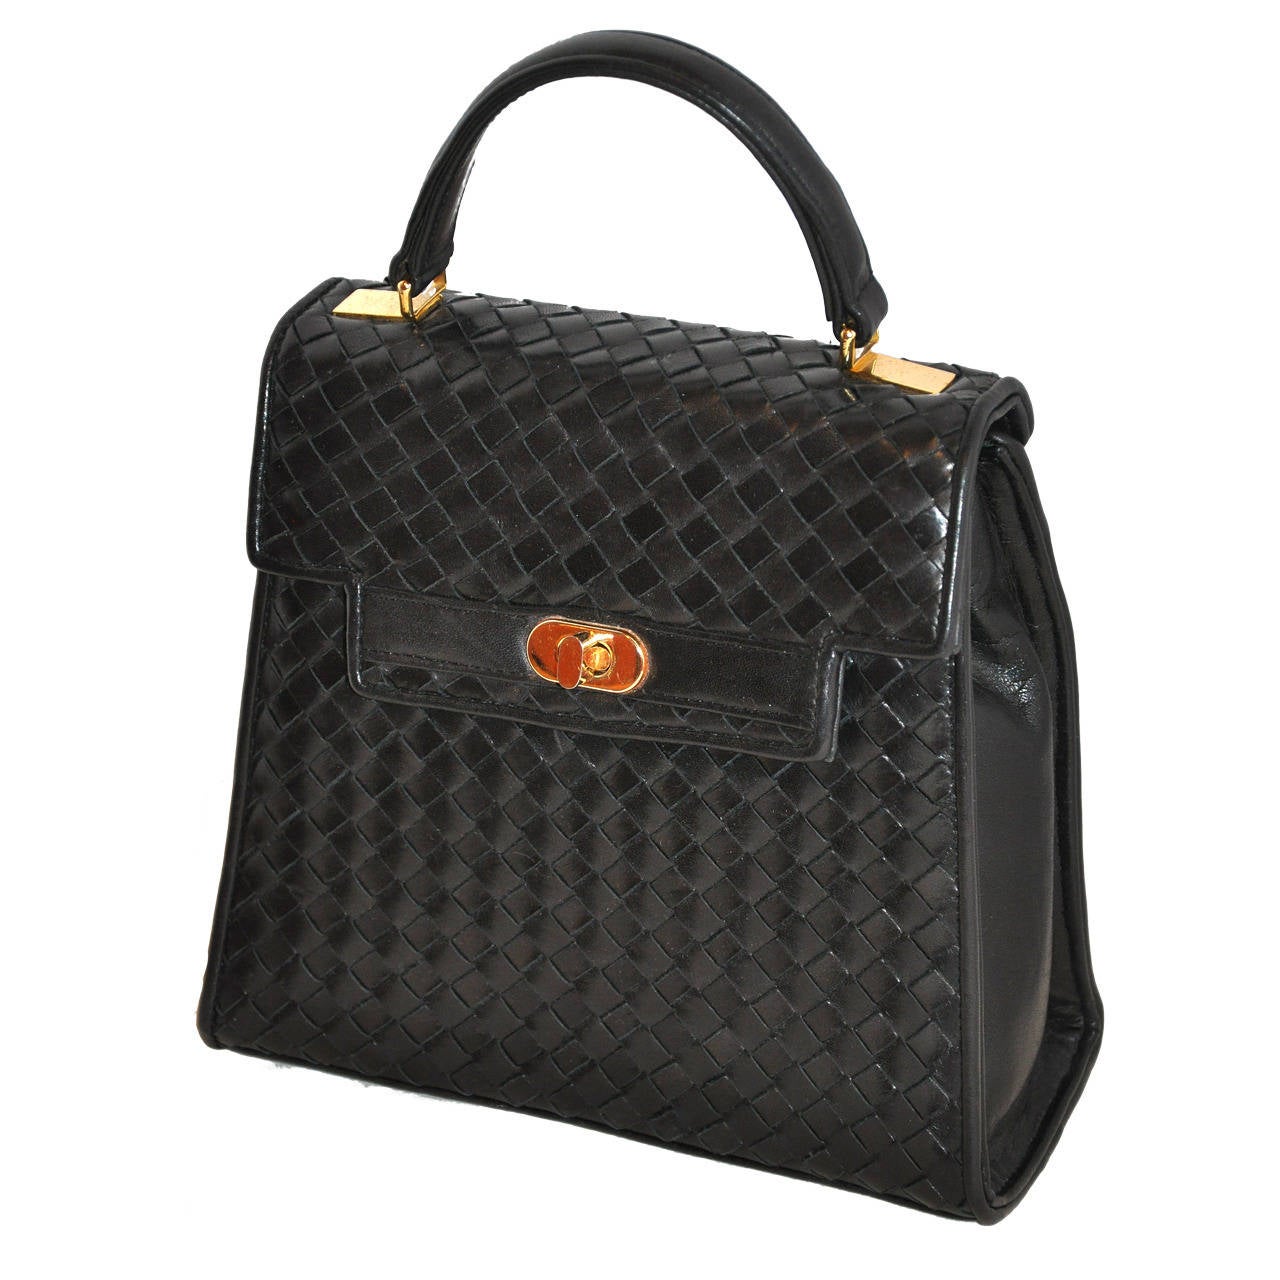 Saks Fifth Avenue Black Lambskin Woven Leather Handbag For Sale at 1stdibs